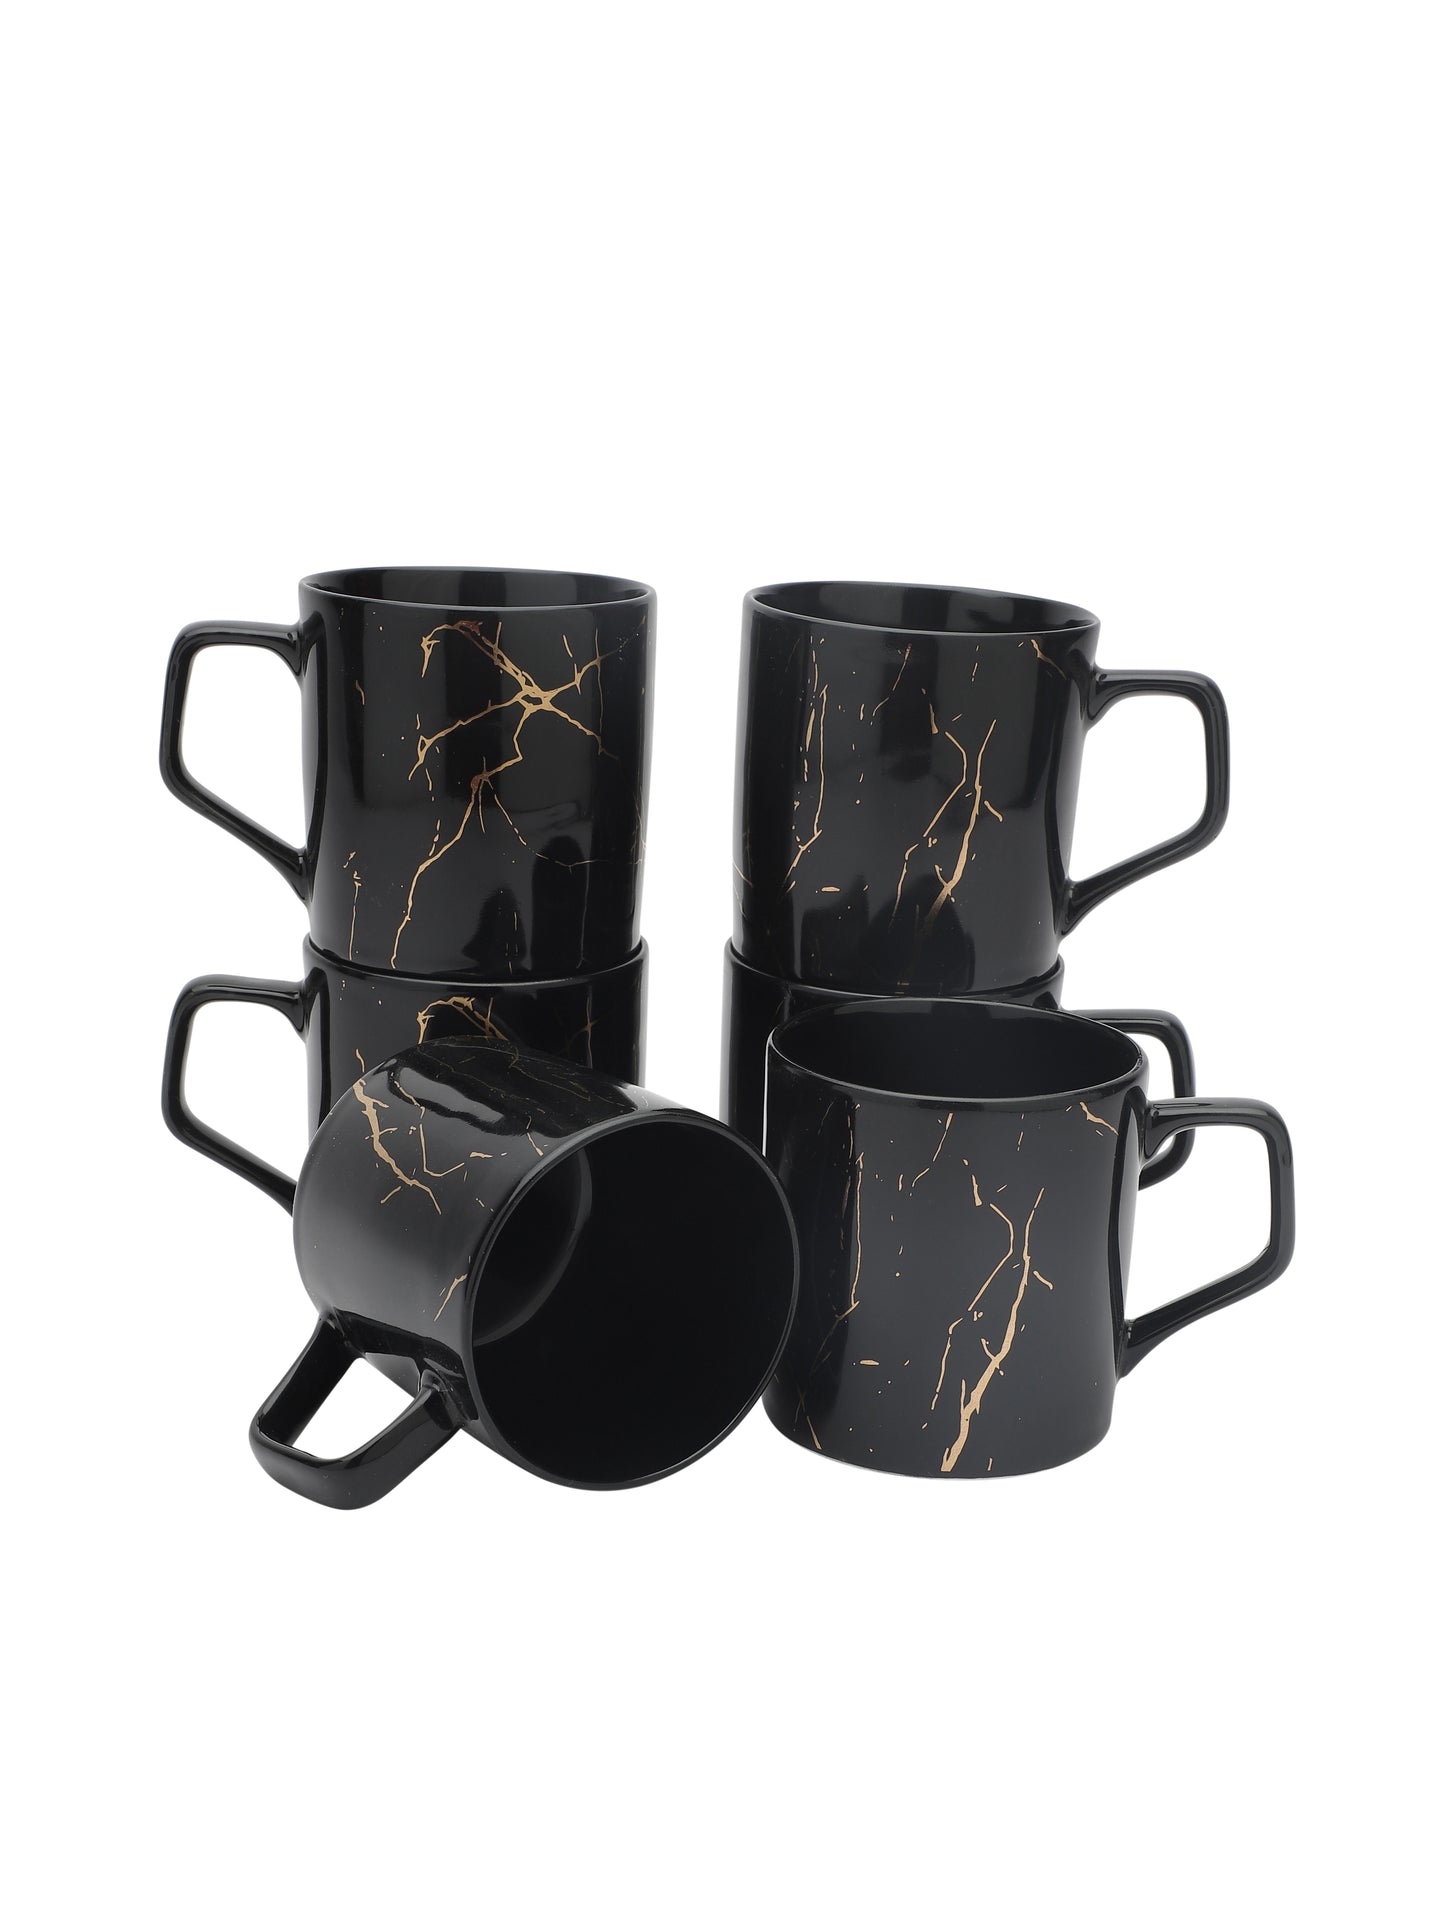 Director Marble Monochrome Black Gold Coffee & Tea Mugs, 220ml, Set of 6